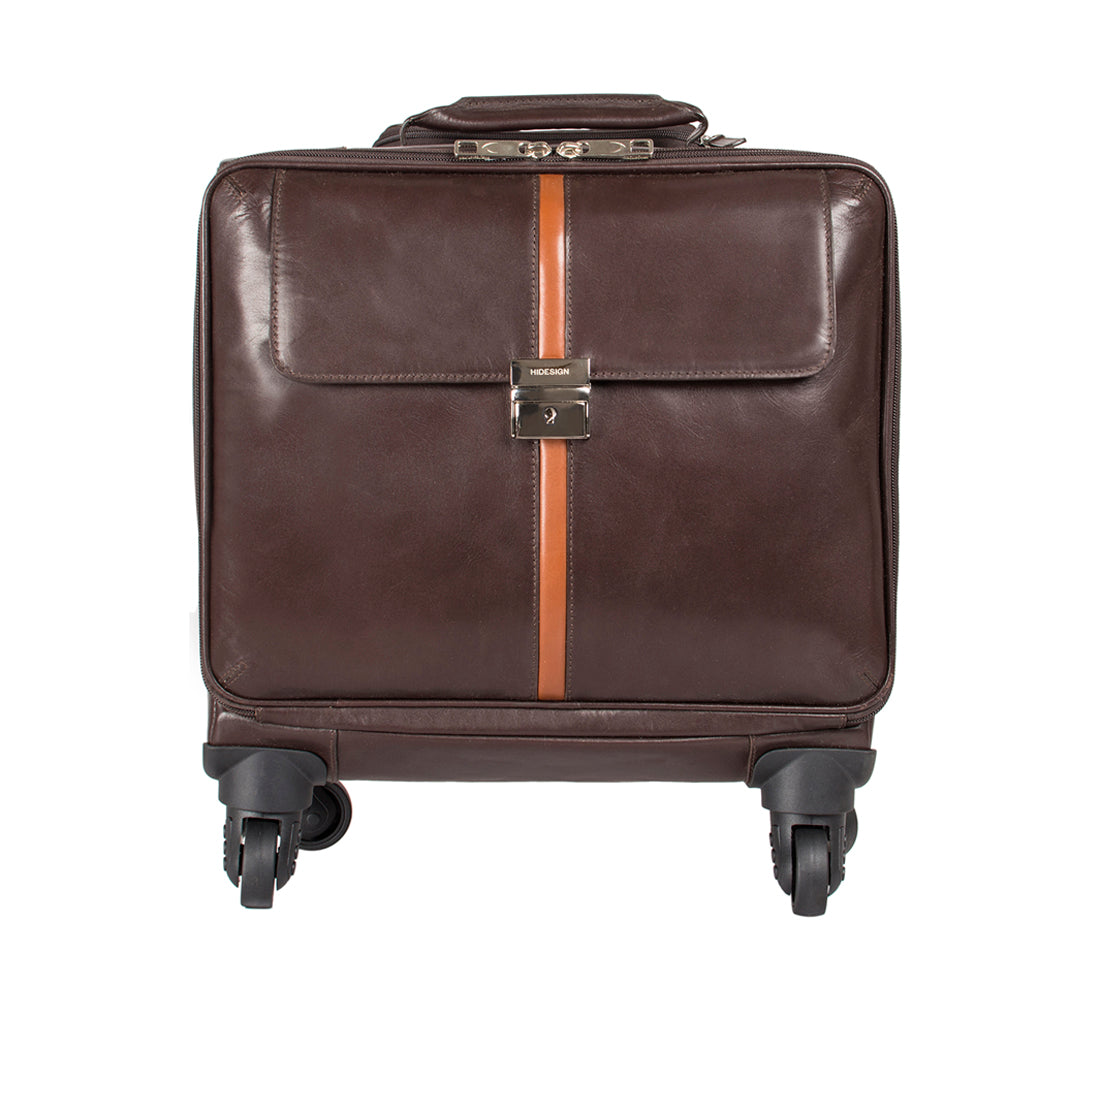 Best Luggage Bags: बेस्ट ट्रिप को और बेस्ट बना देंगे ये Skybags और सफारी  लगेज | best luggage bags to sort your travel plans smartly top picks from  skybags safari etc | HerZindagi